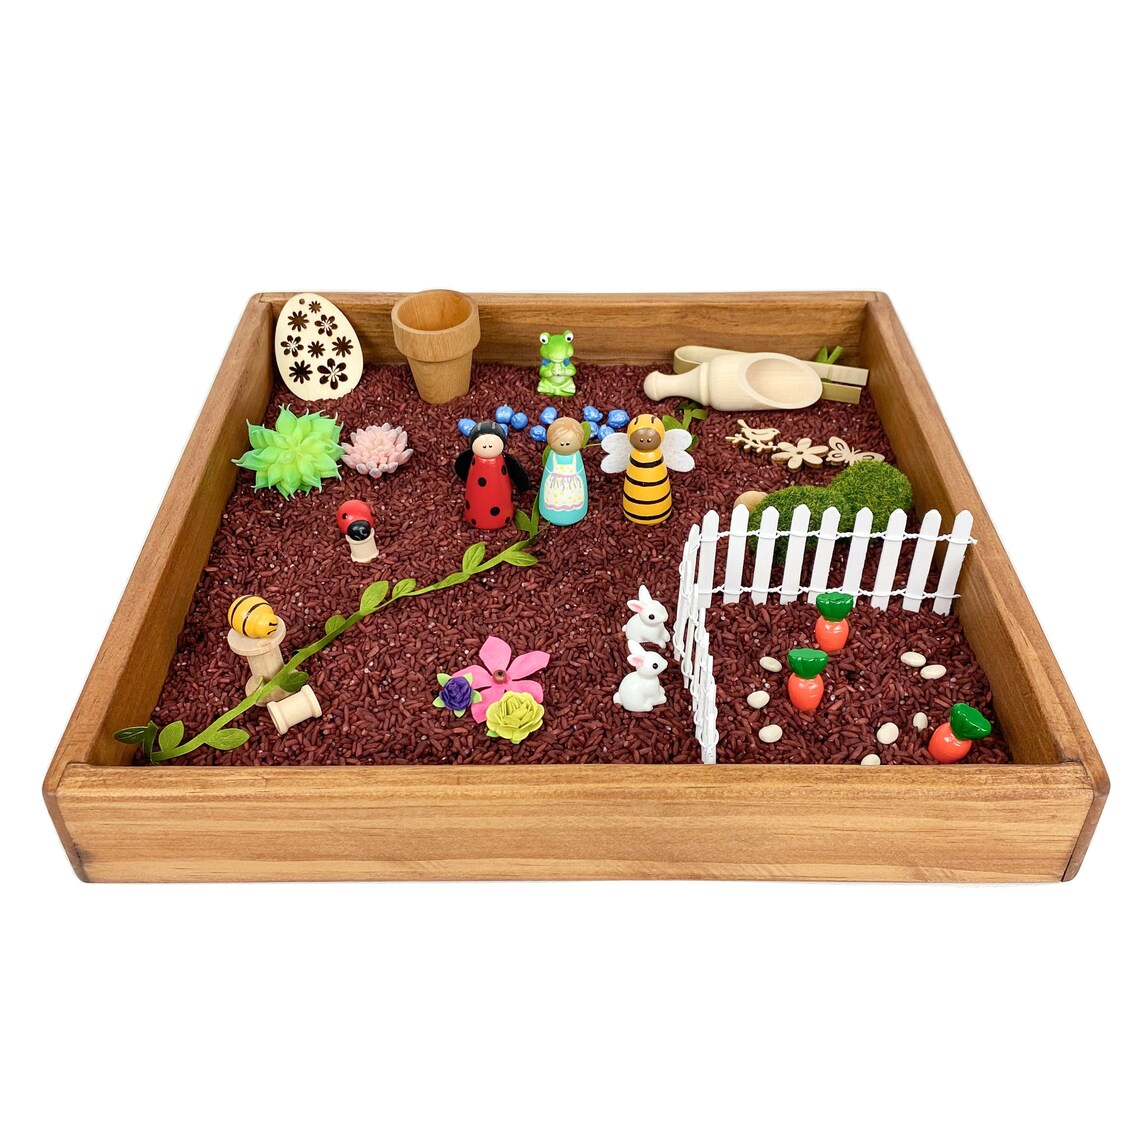 wooden sensory bin with gardening theme